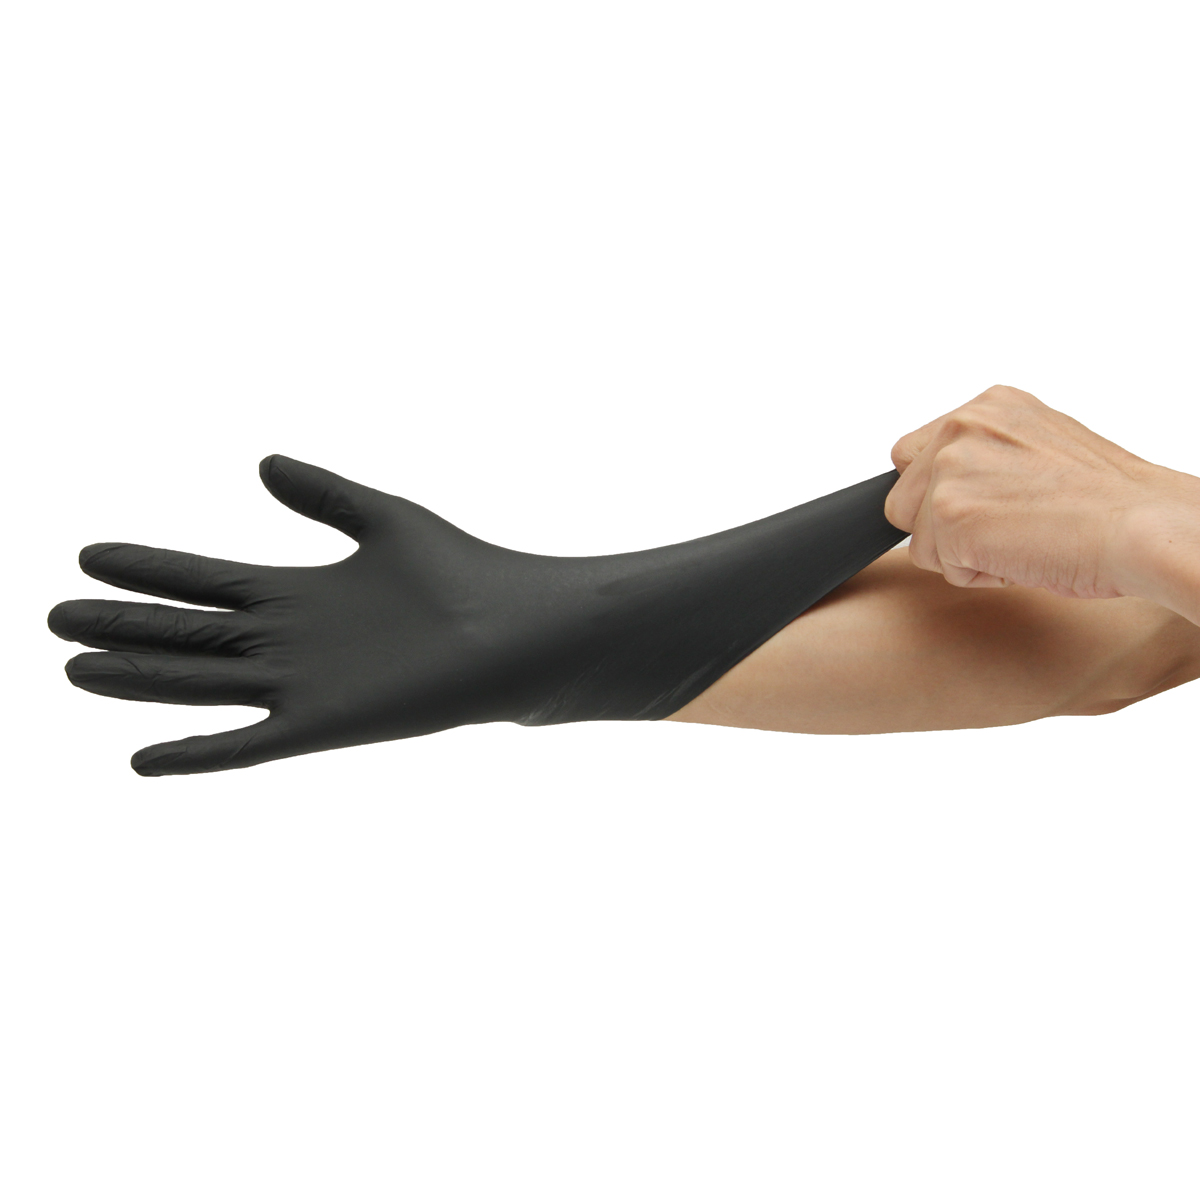 100Pcs-SML-Black-Latex-Disposable-Gloves-Tattoo-Piercing-Mechanic-Medical-Gloves-1253343